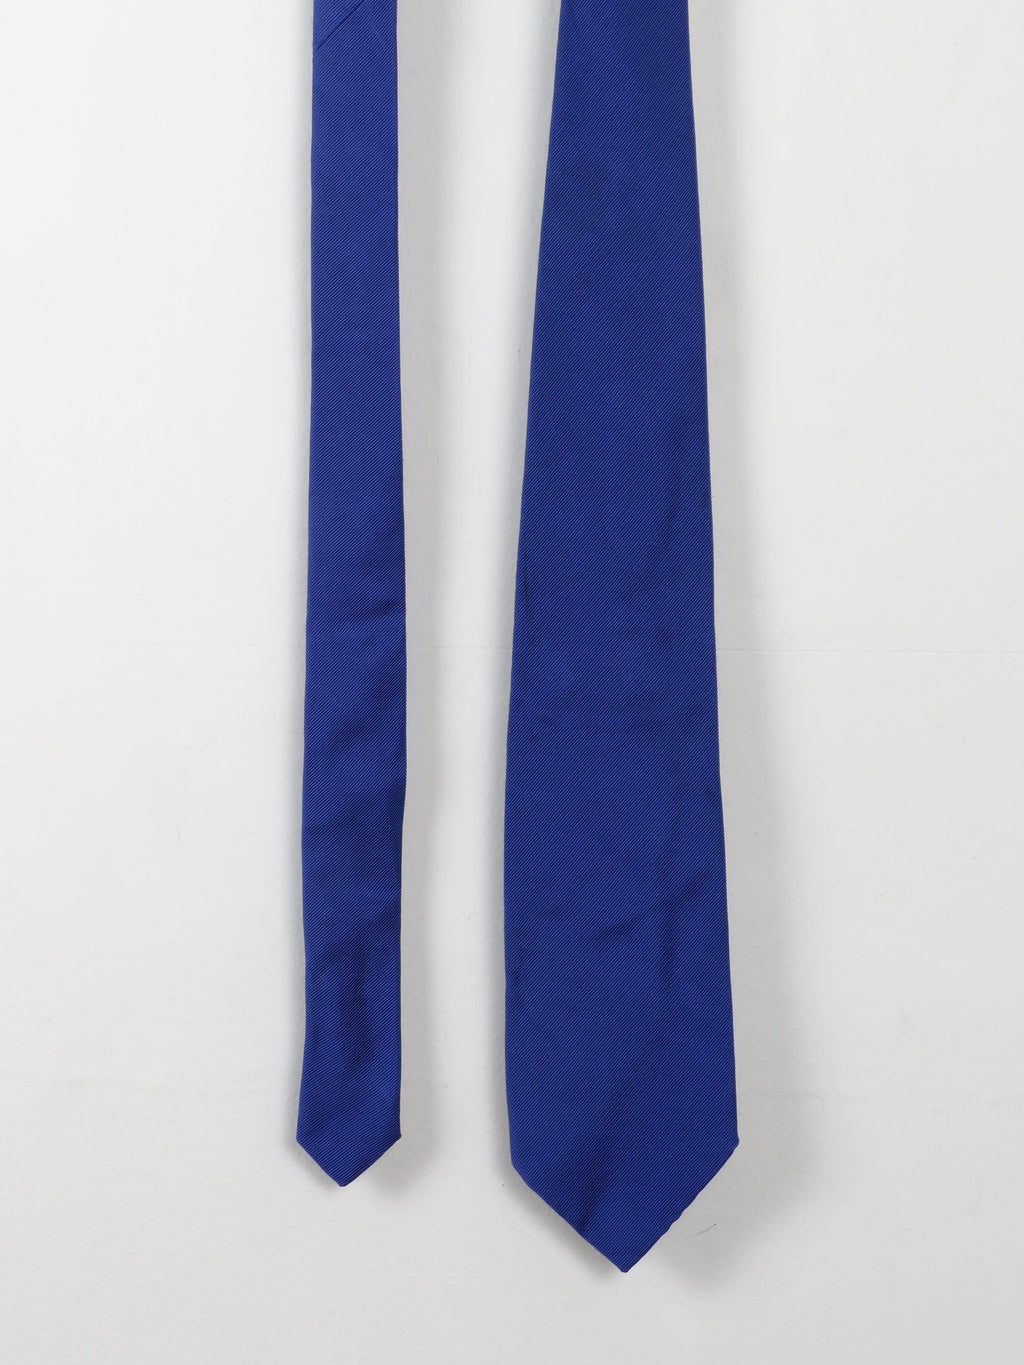 Vintage Blue Tie Louis Copeland - The Harlequin